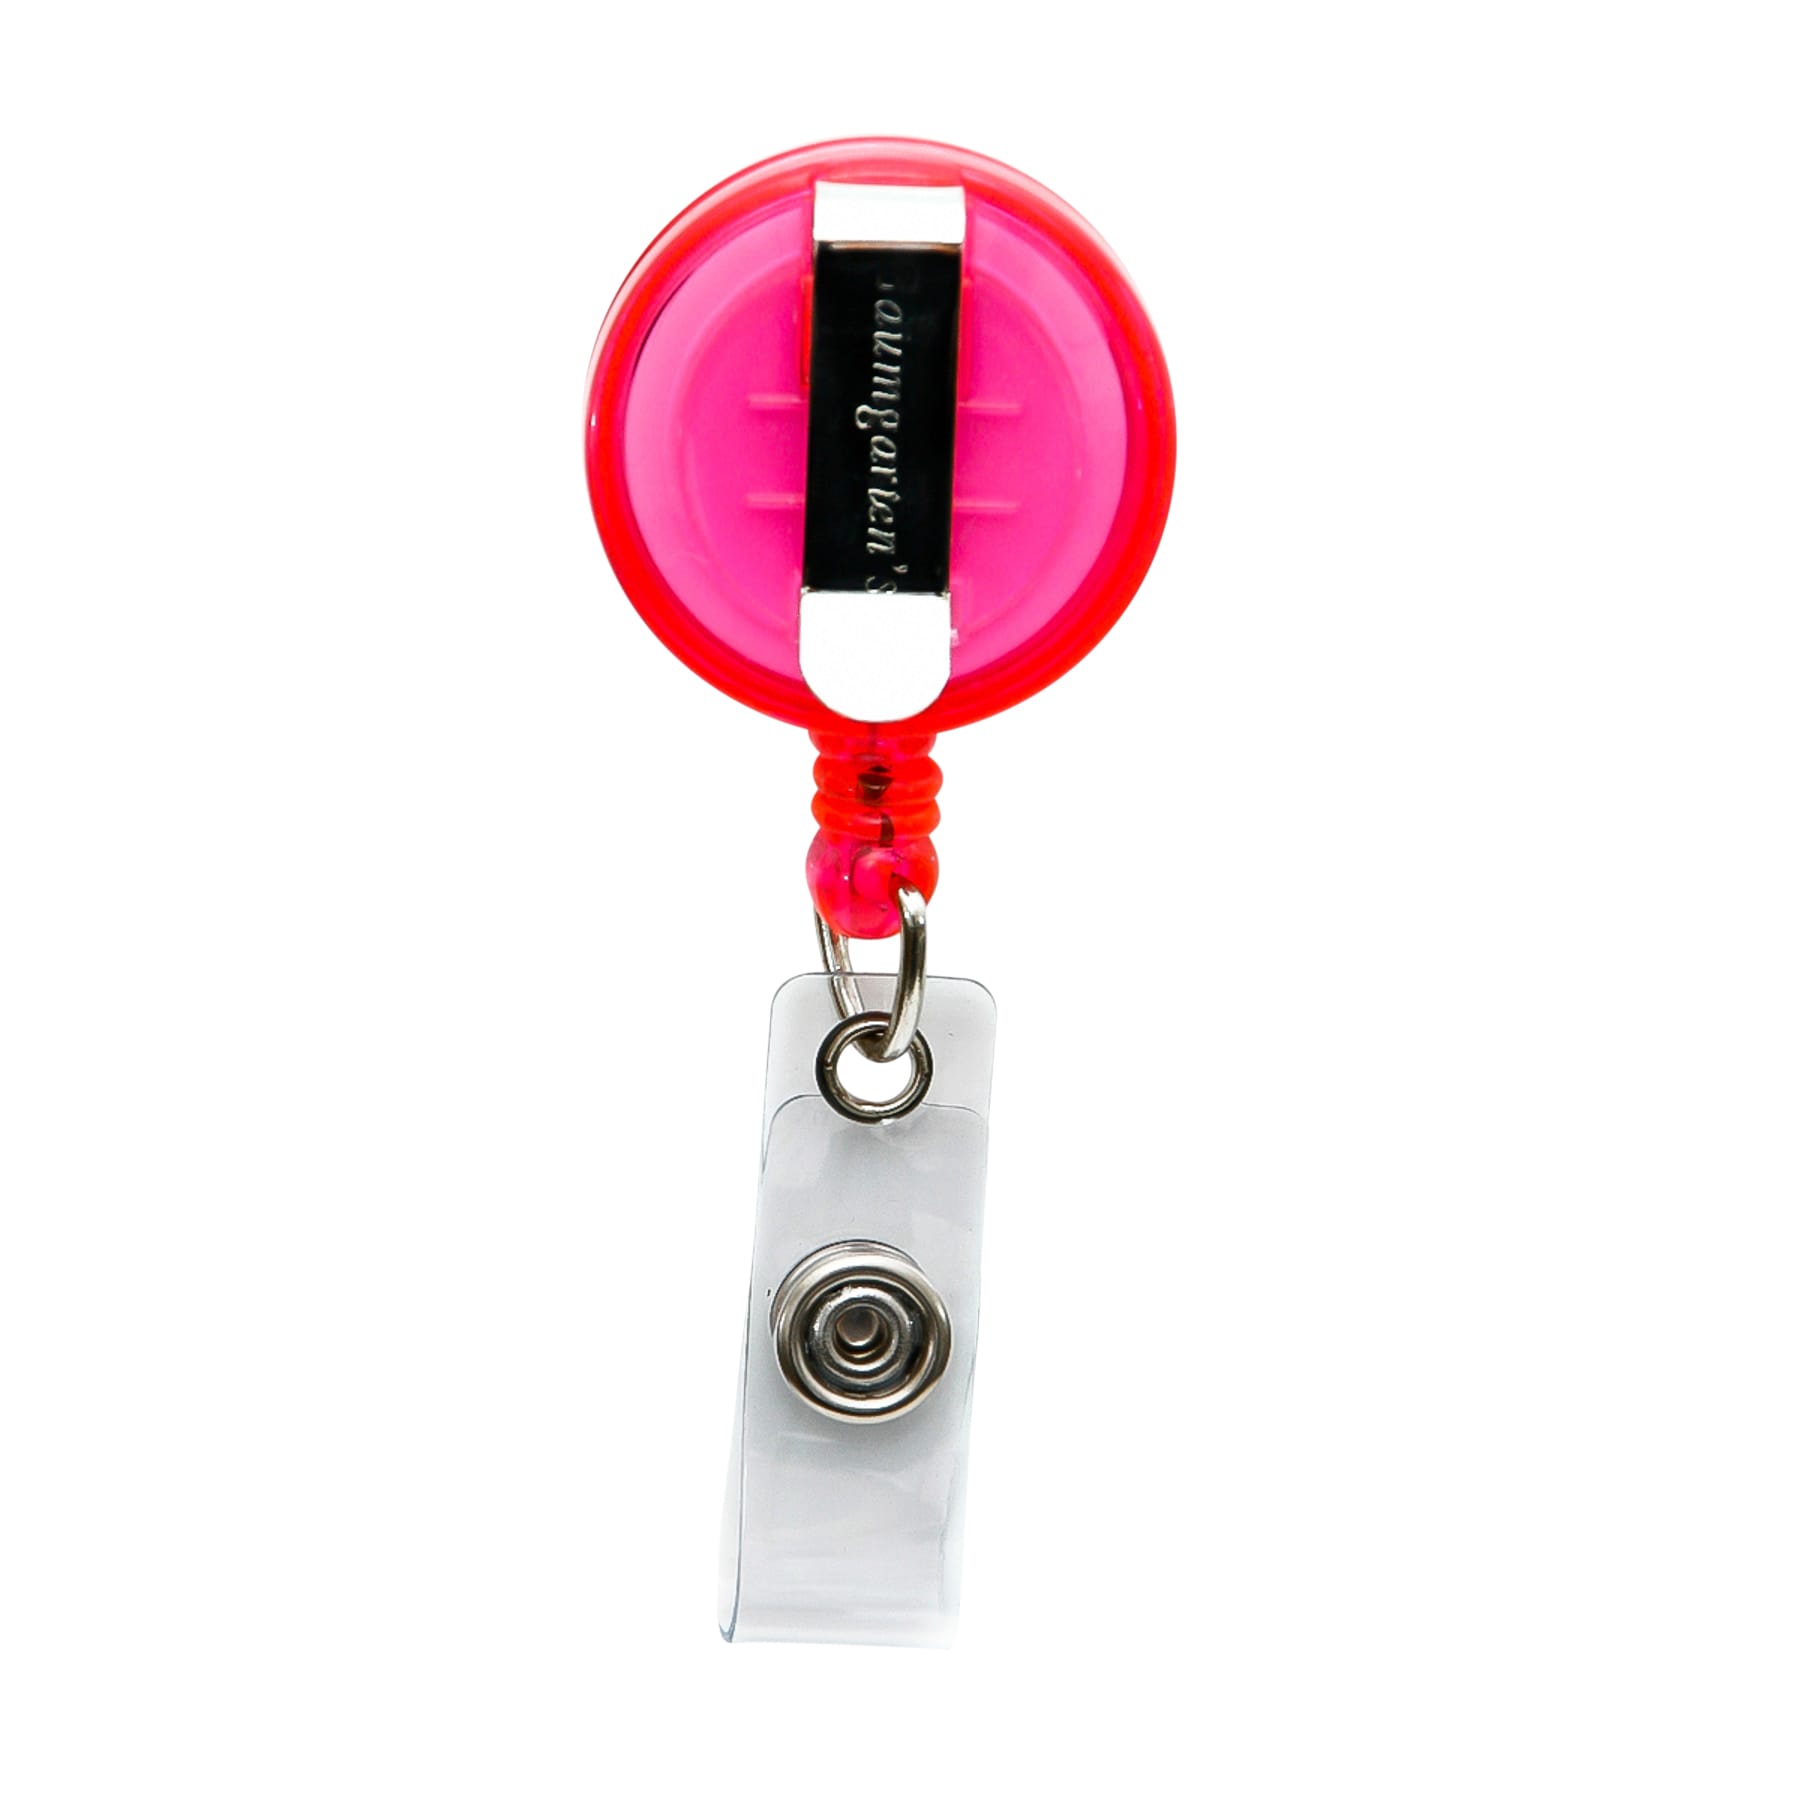 SICURIX Standard ID Badge Reel Round Belt Clip Strap RED (68854)